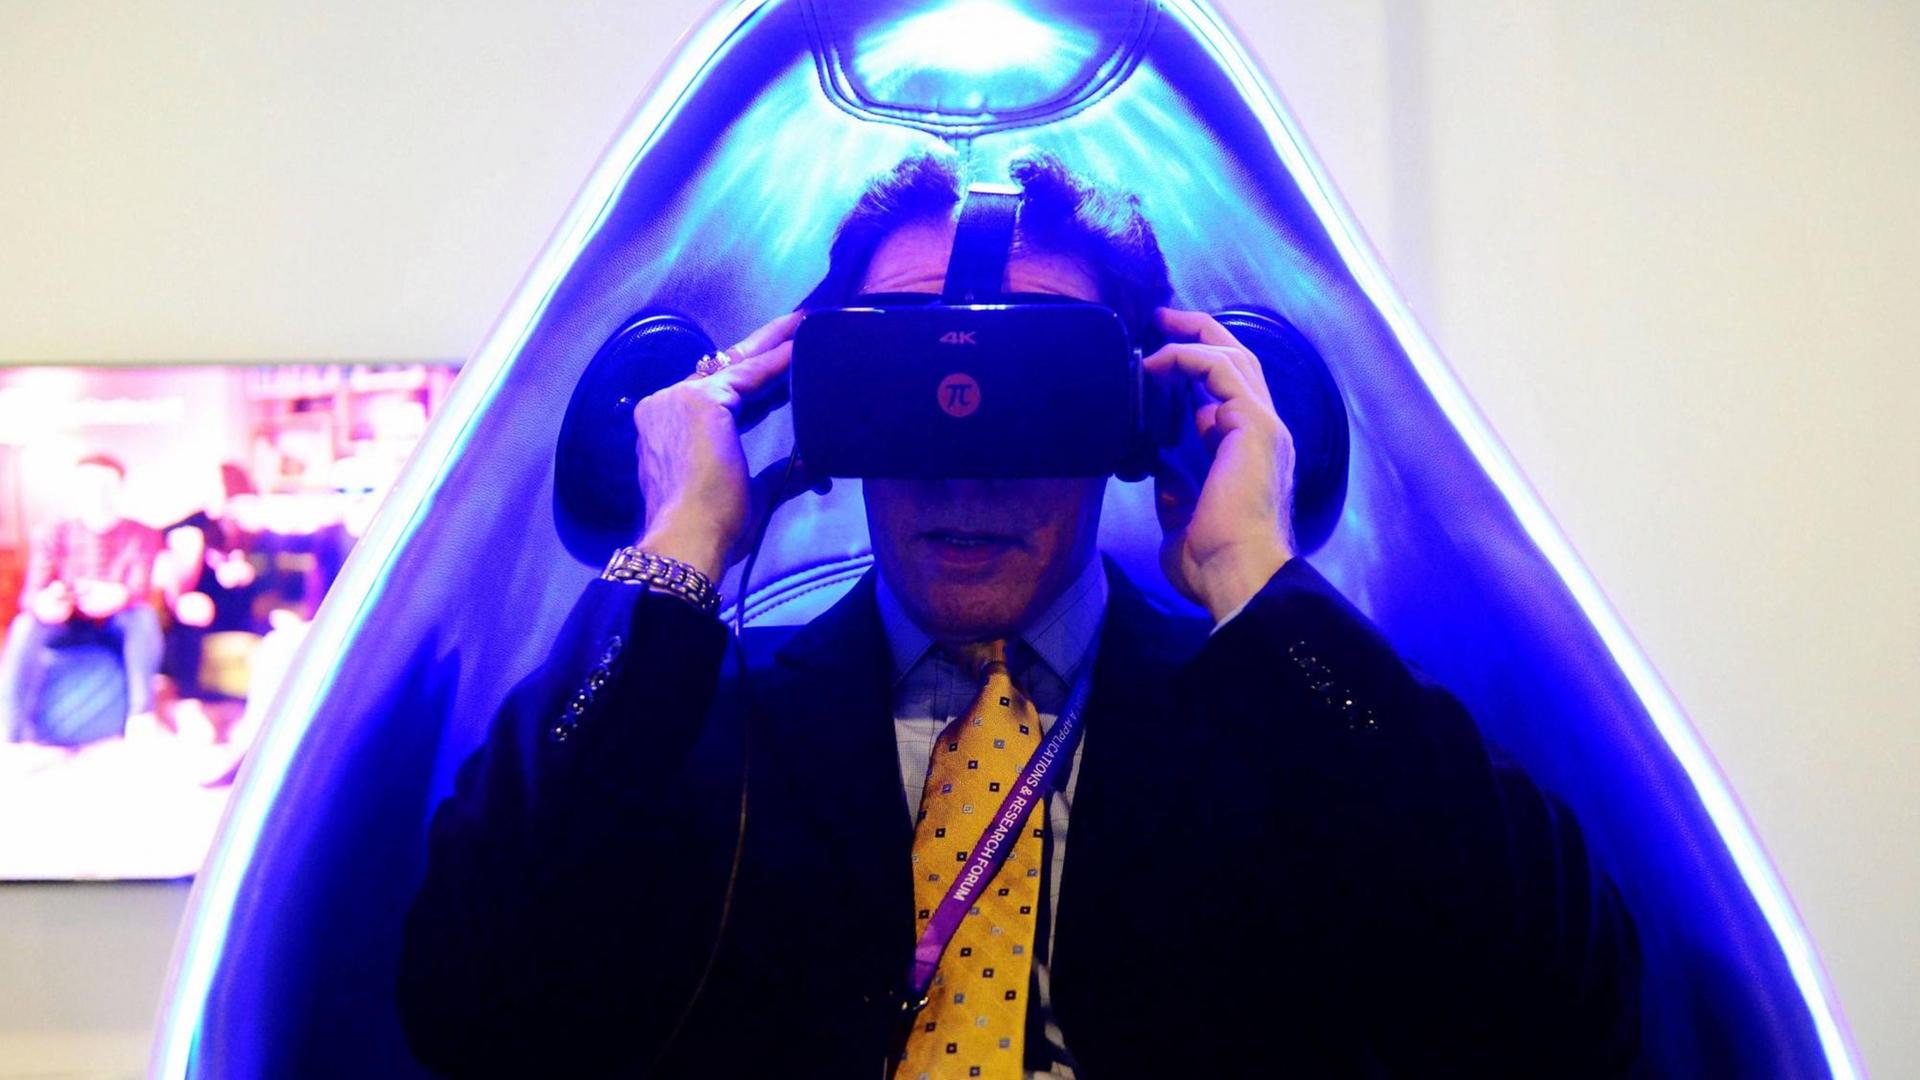 Ein Besucher erlebt Virtual Reality beim Hewlett Packard Enterprise Experience Center of Futre Cities in Qingao, China, am 16.11.2016.